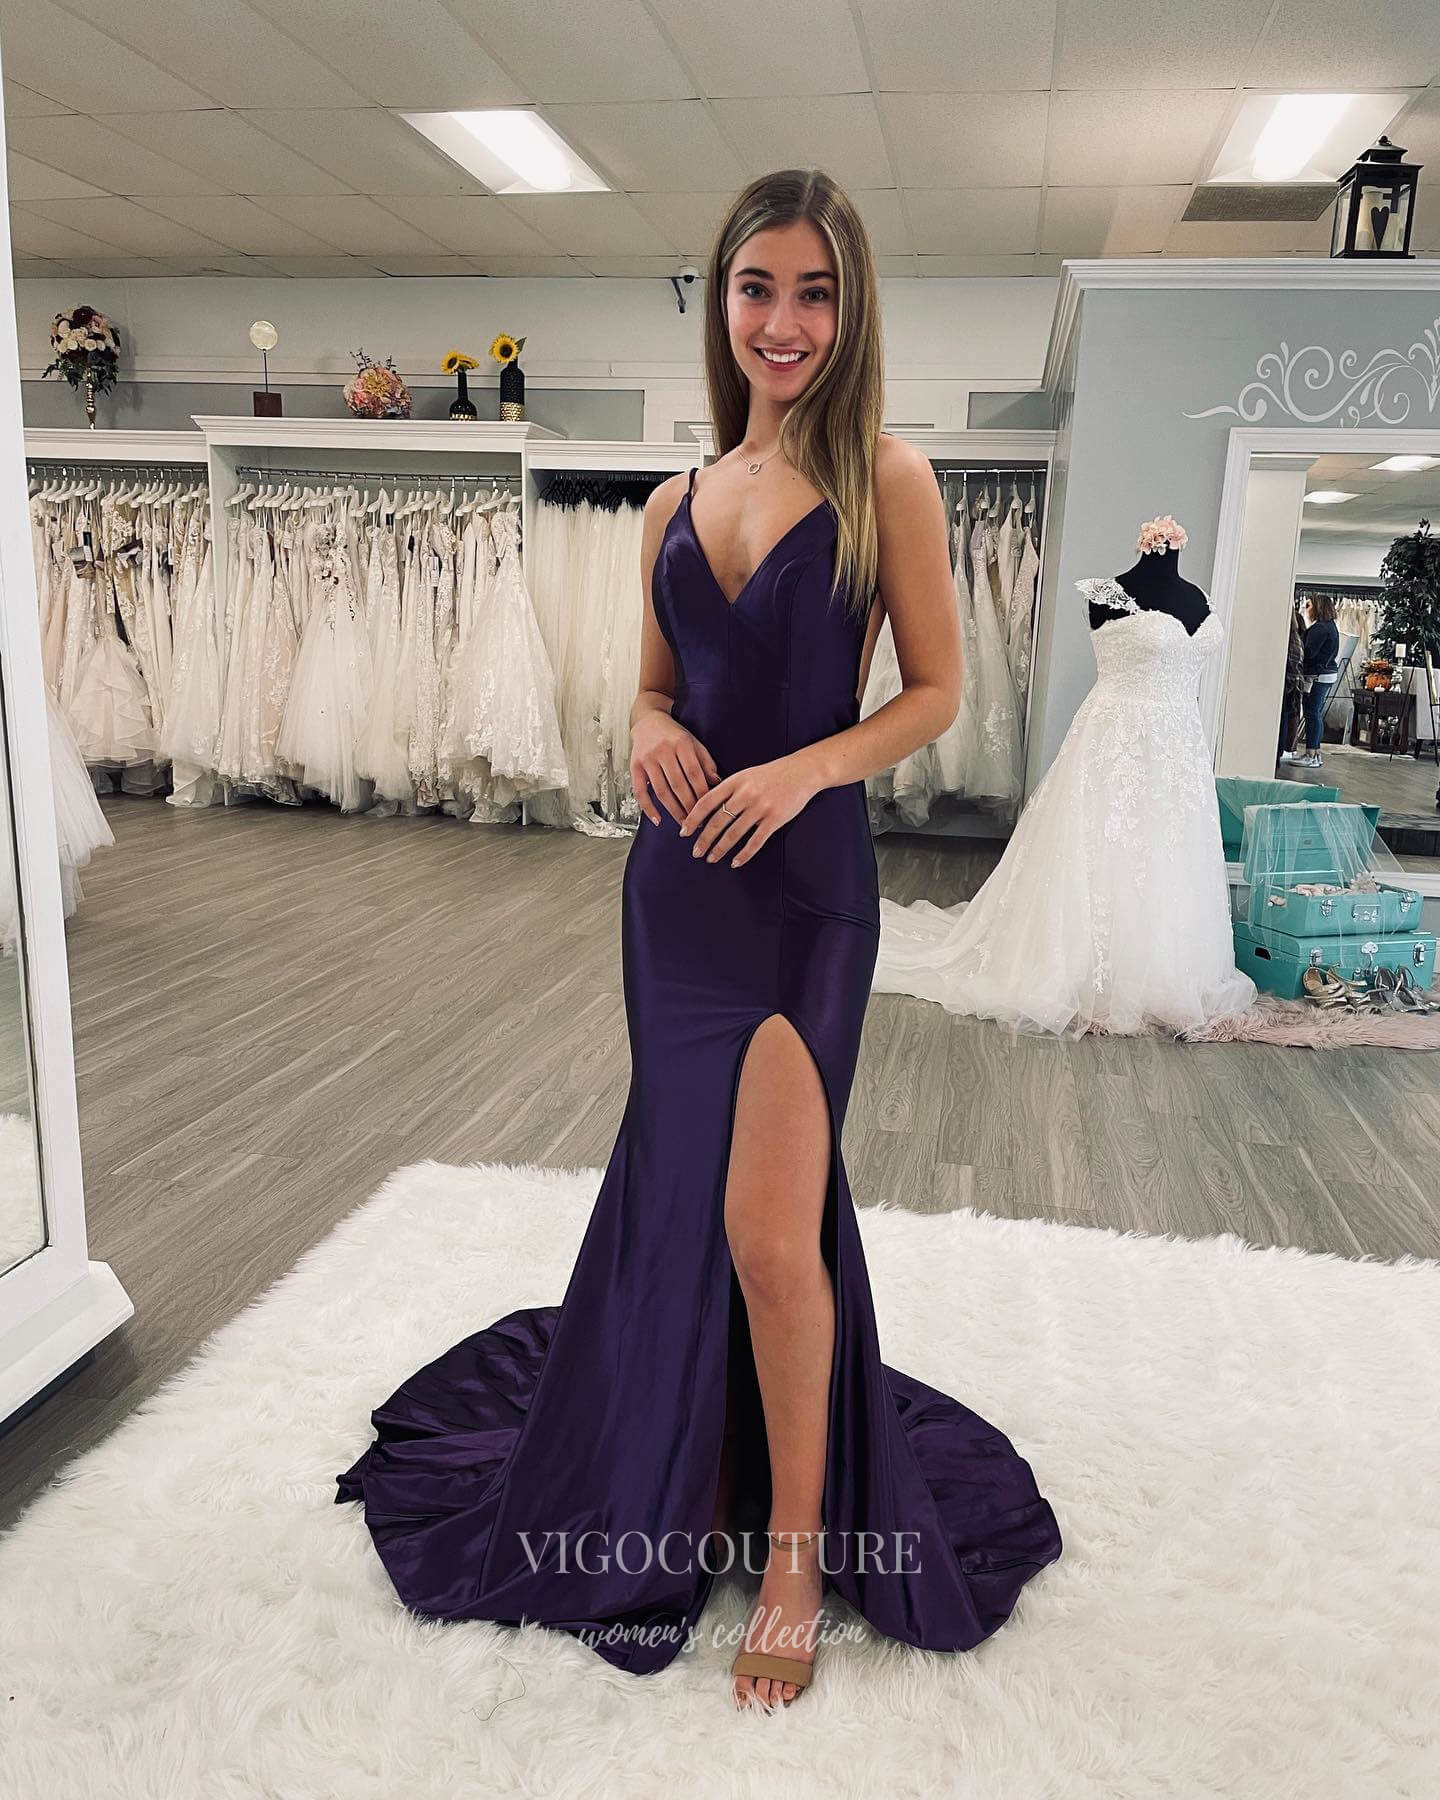 purple prom dresses